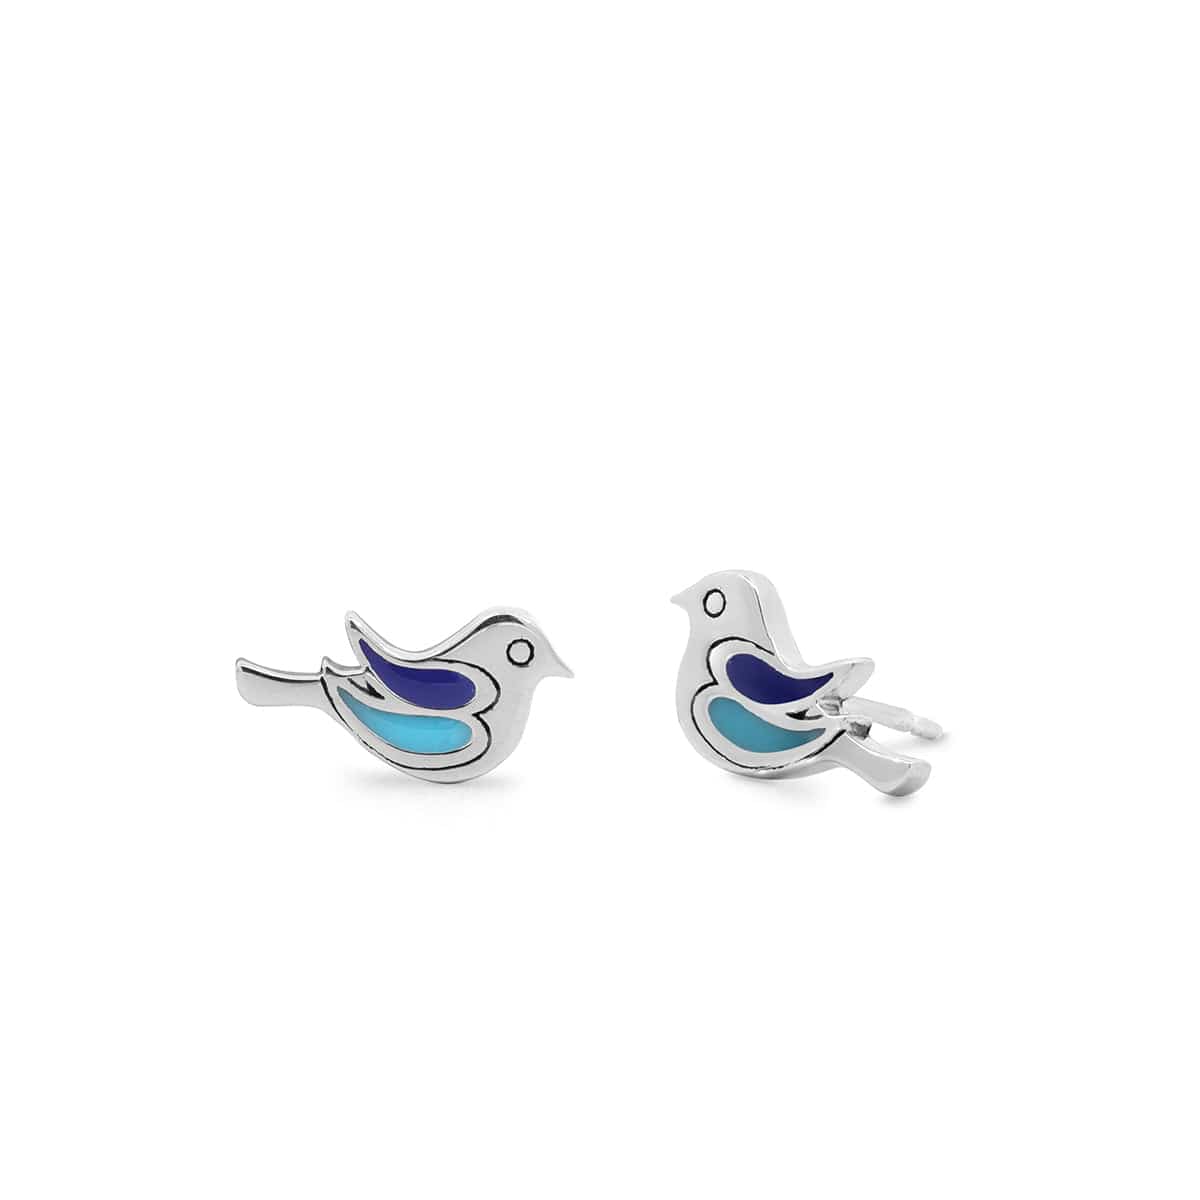 Boma Jewelry Earrings Bird Stud Earrings with Stone